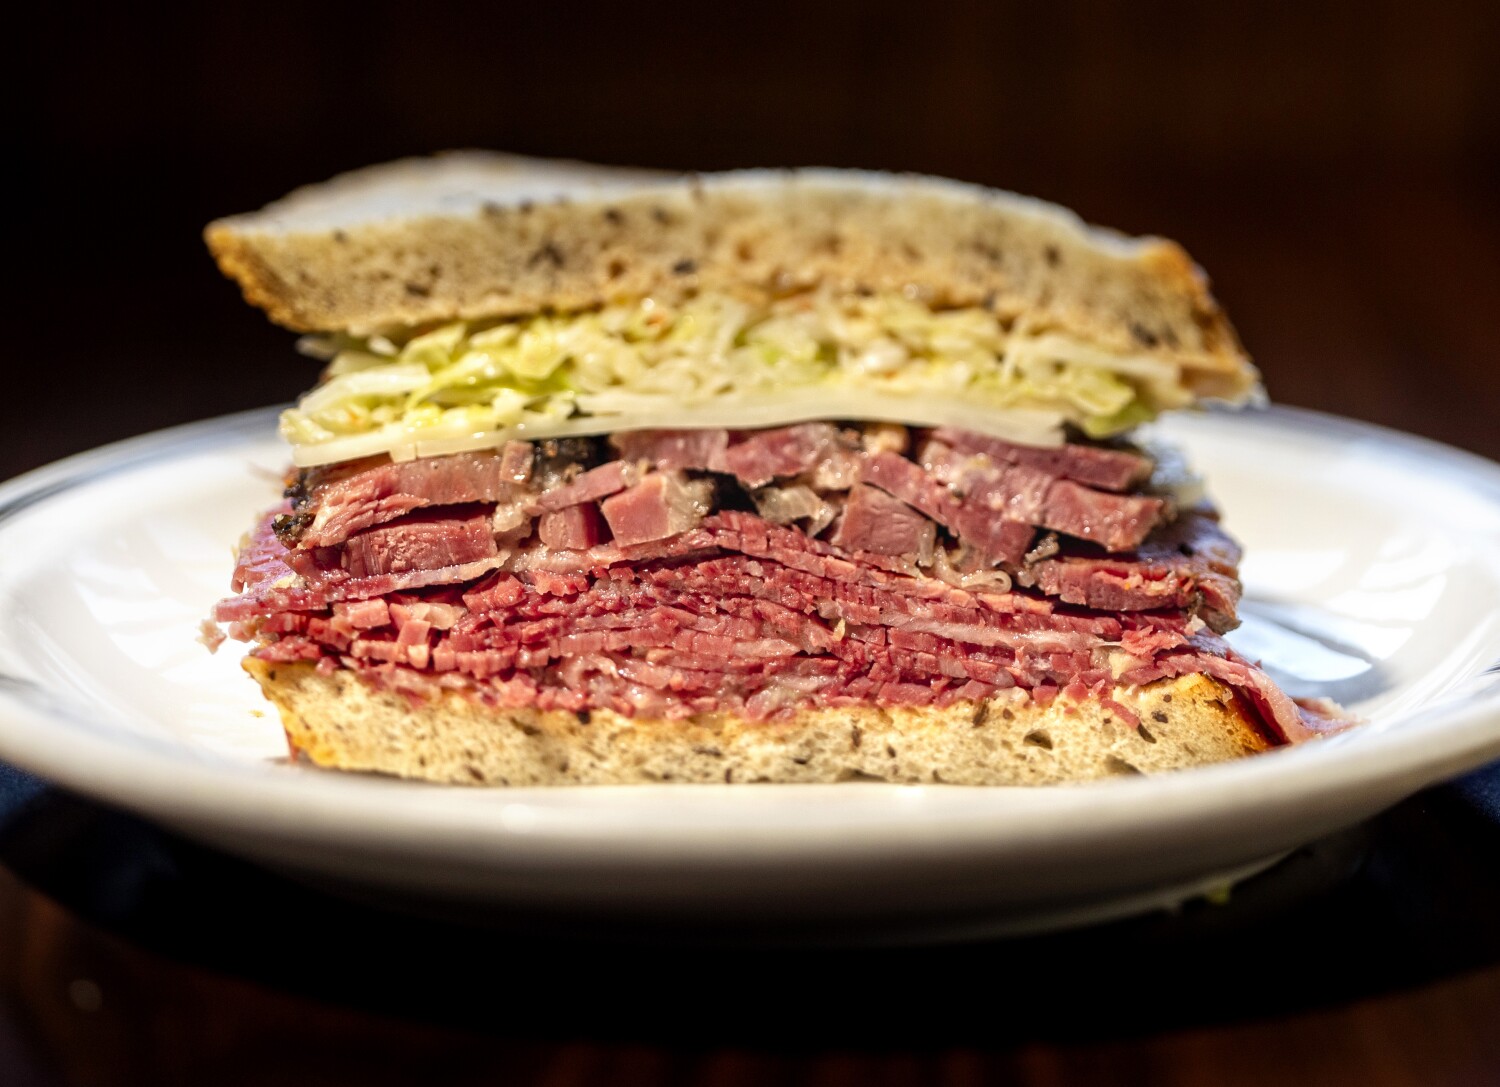 Langers Deli will celebrate its 75th anniversary with half-price sandwiches